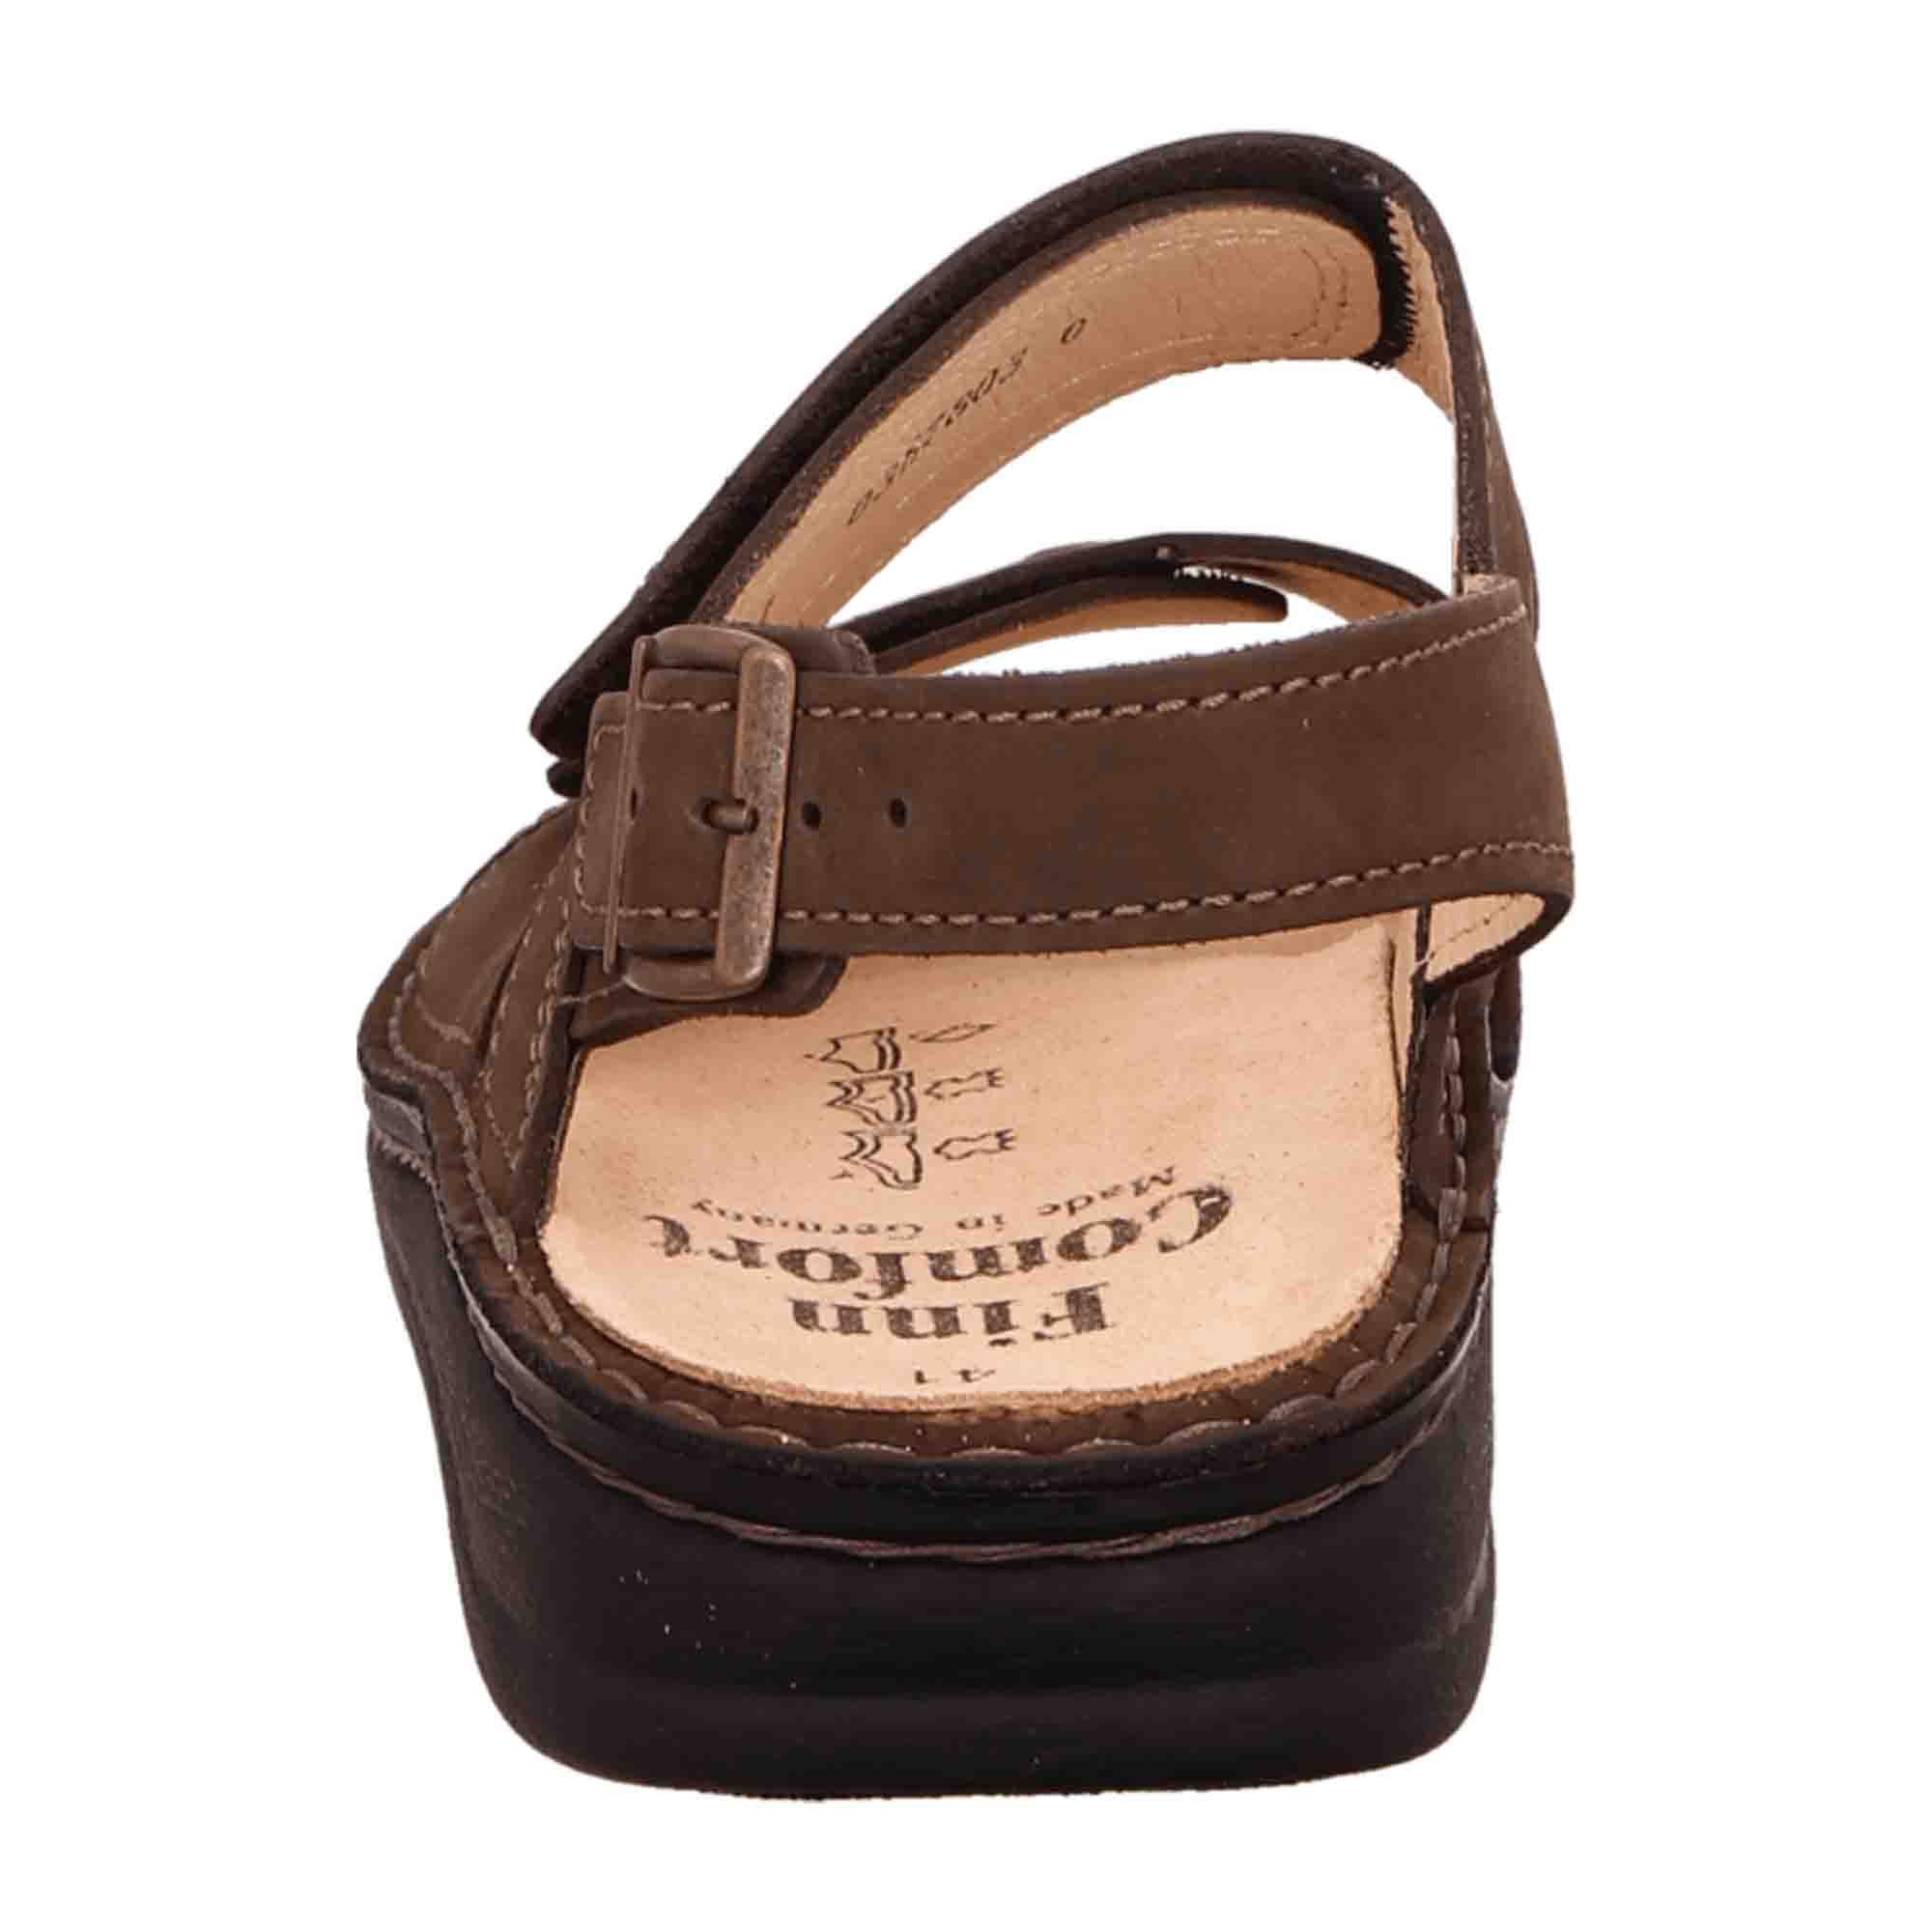 Finn Comfort Toro Soft Men's Sandals - Durable & Stylish in Brown